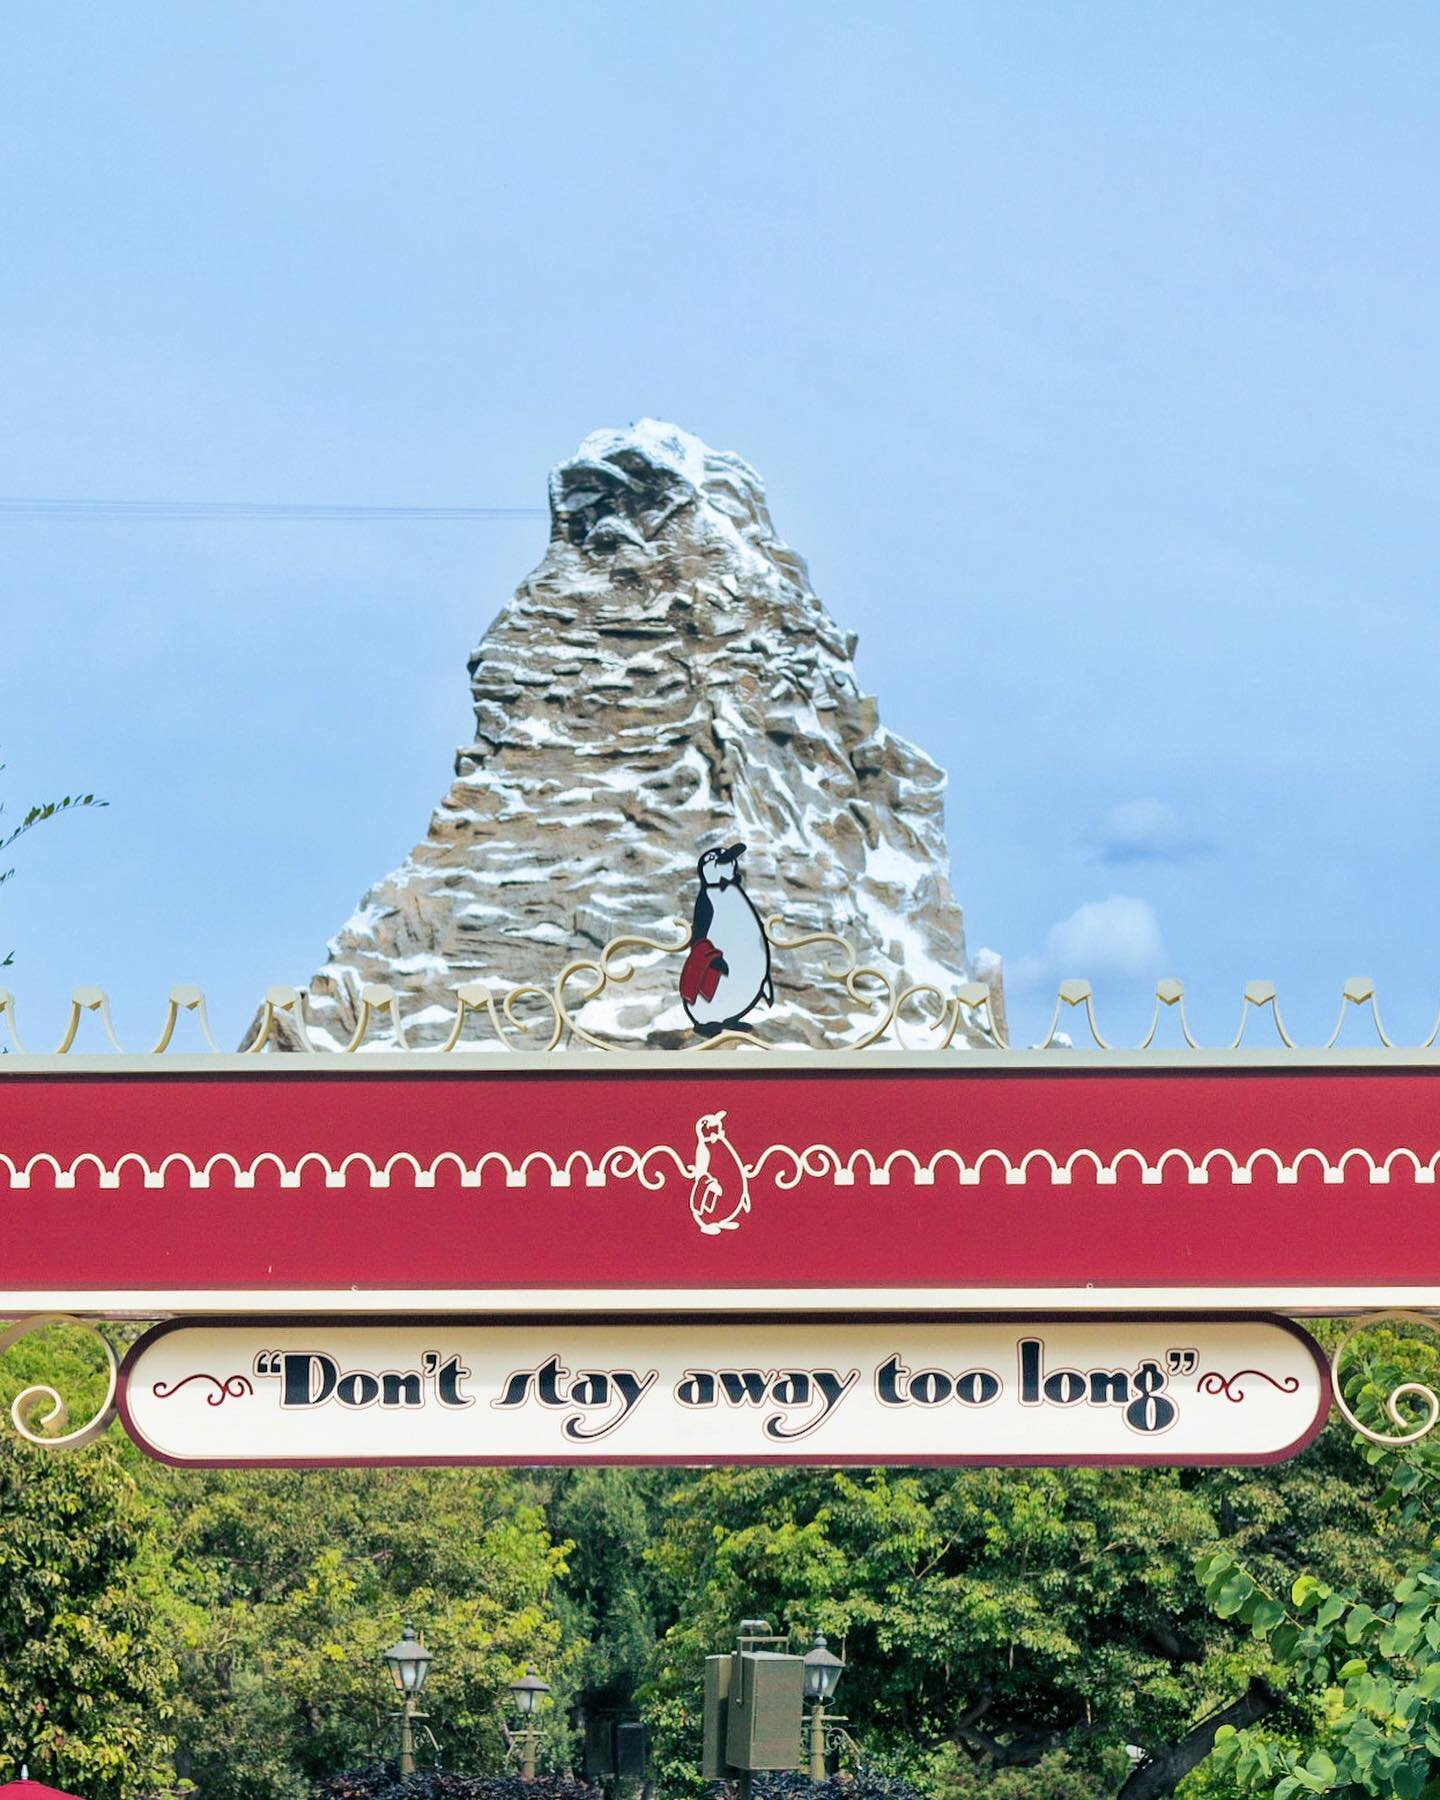 &ldquo;Don&rsquo;t stay away too long.&rdquo; I always try not to, Disneyland. 

#disneyland #disney #disney100